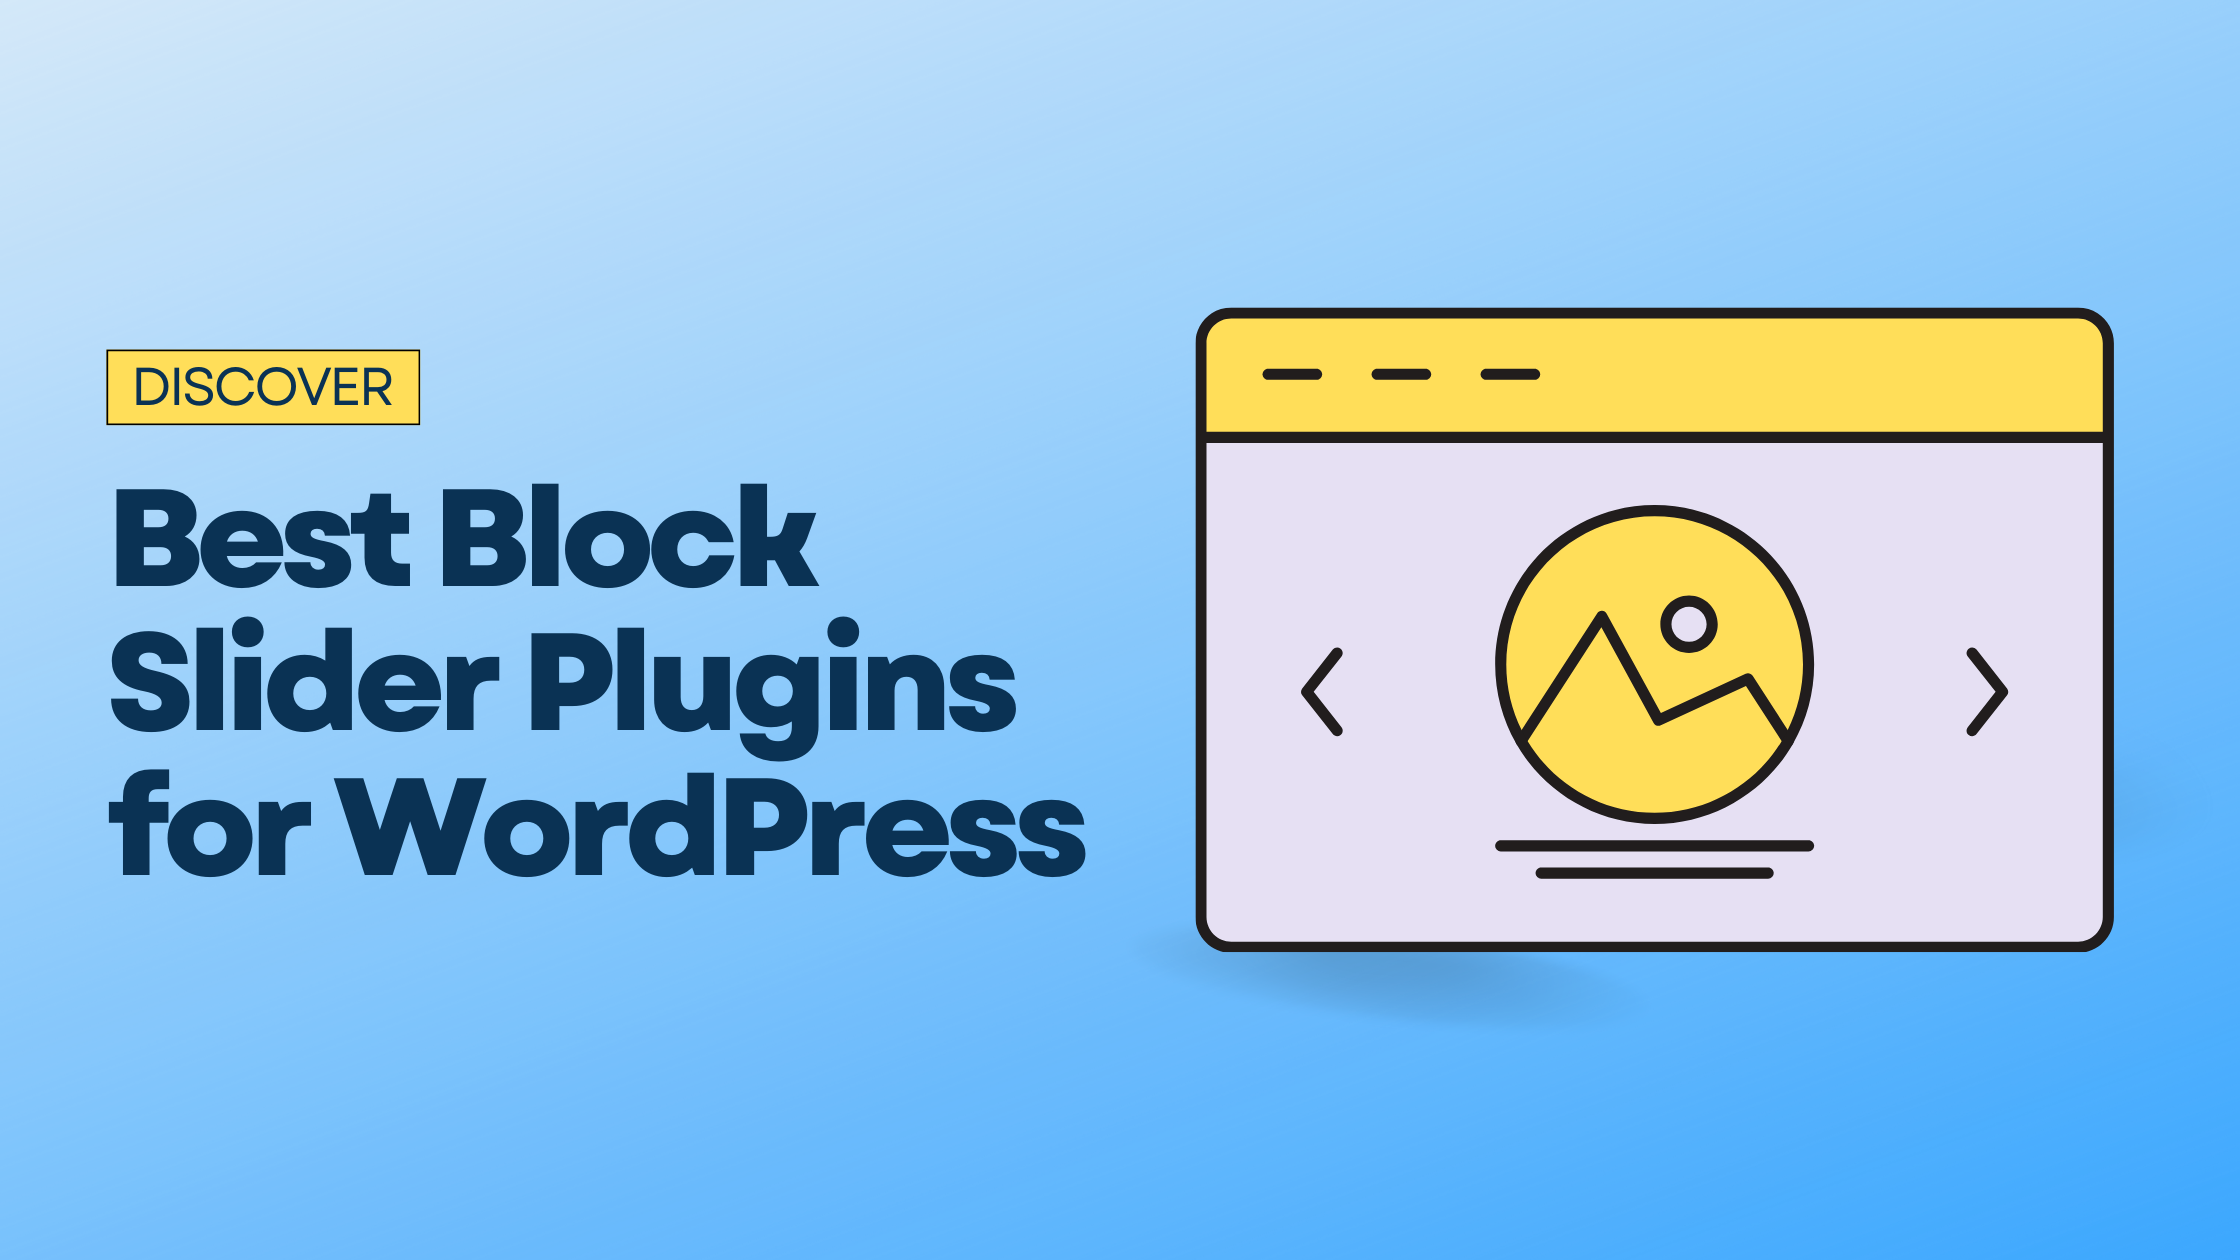 Discover the Best Block Slider Plugins for WordPress